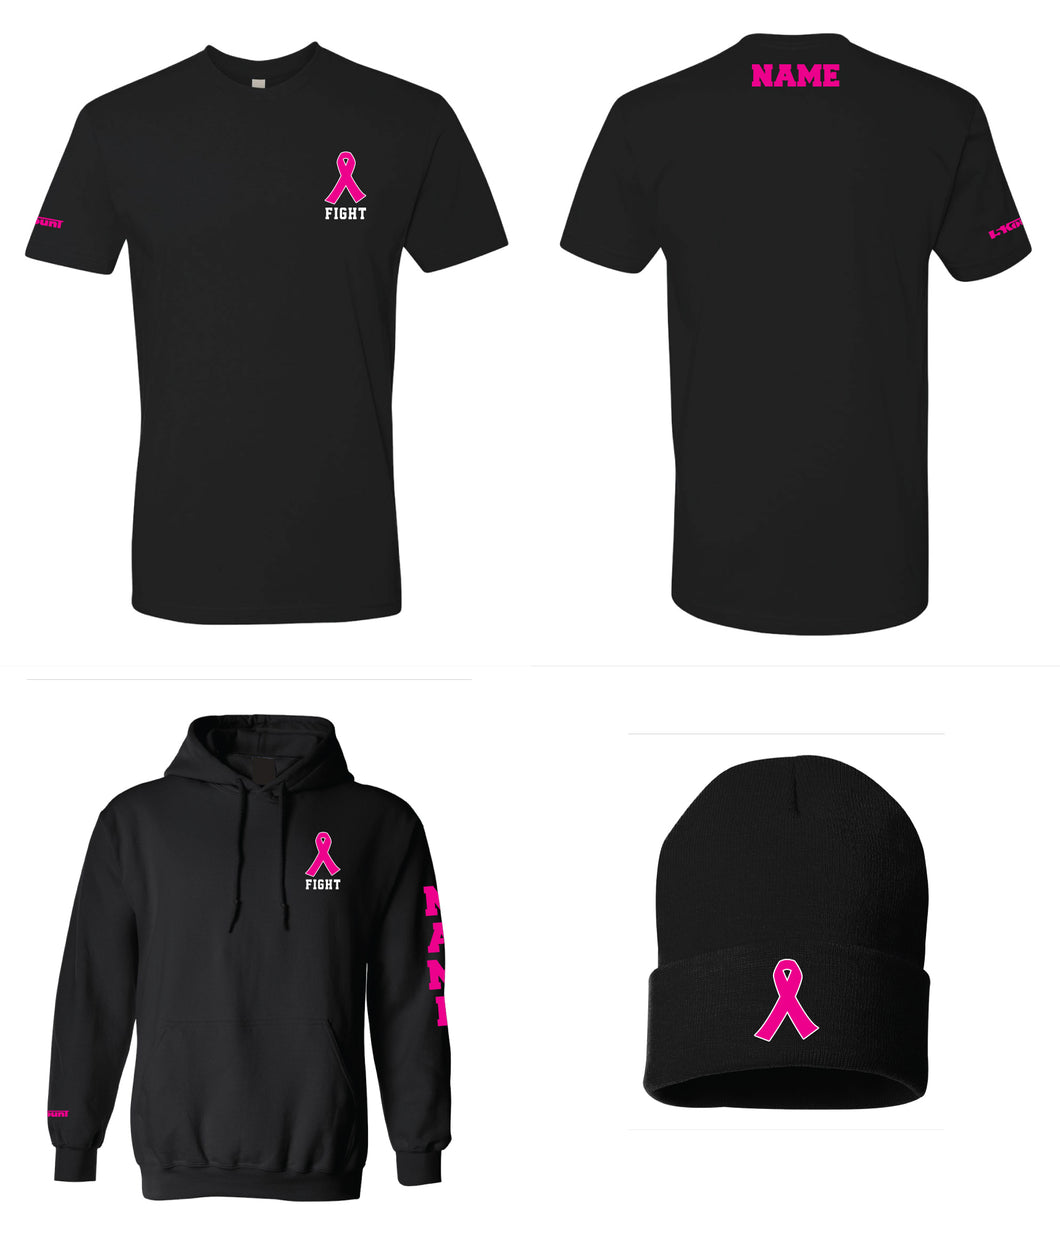 Breast Cancer Awareness Football Fan Package - 5KounT2018